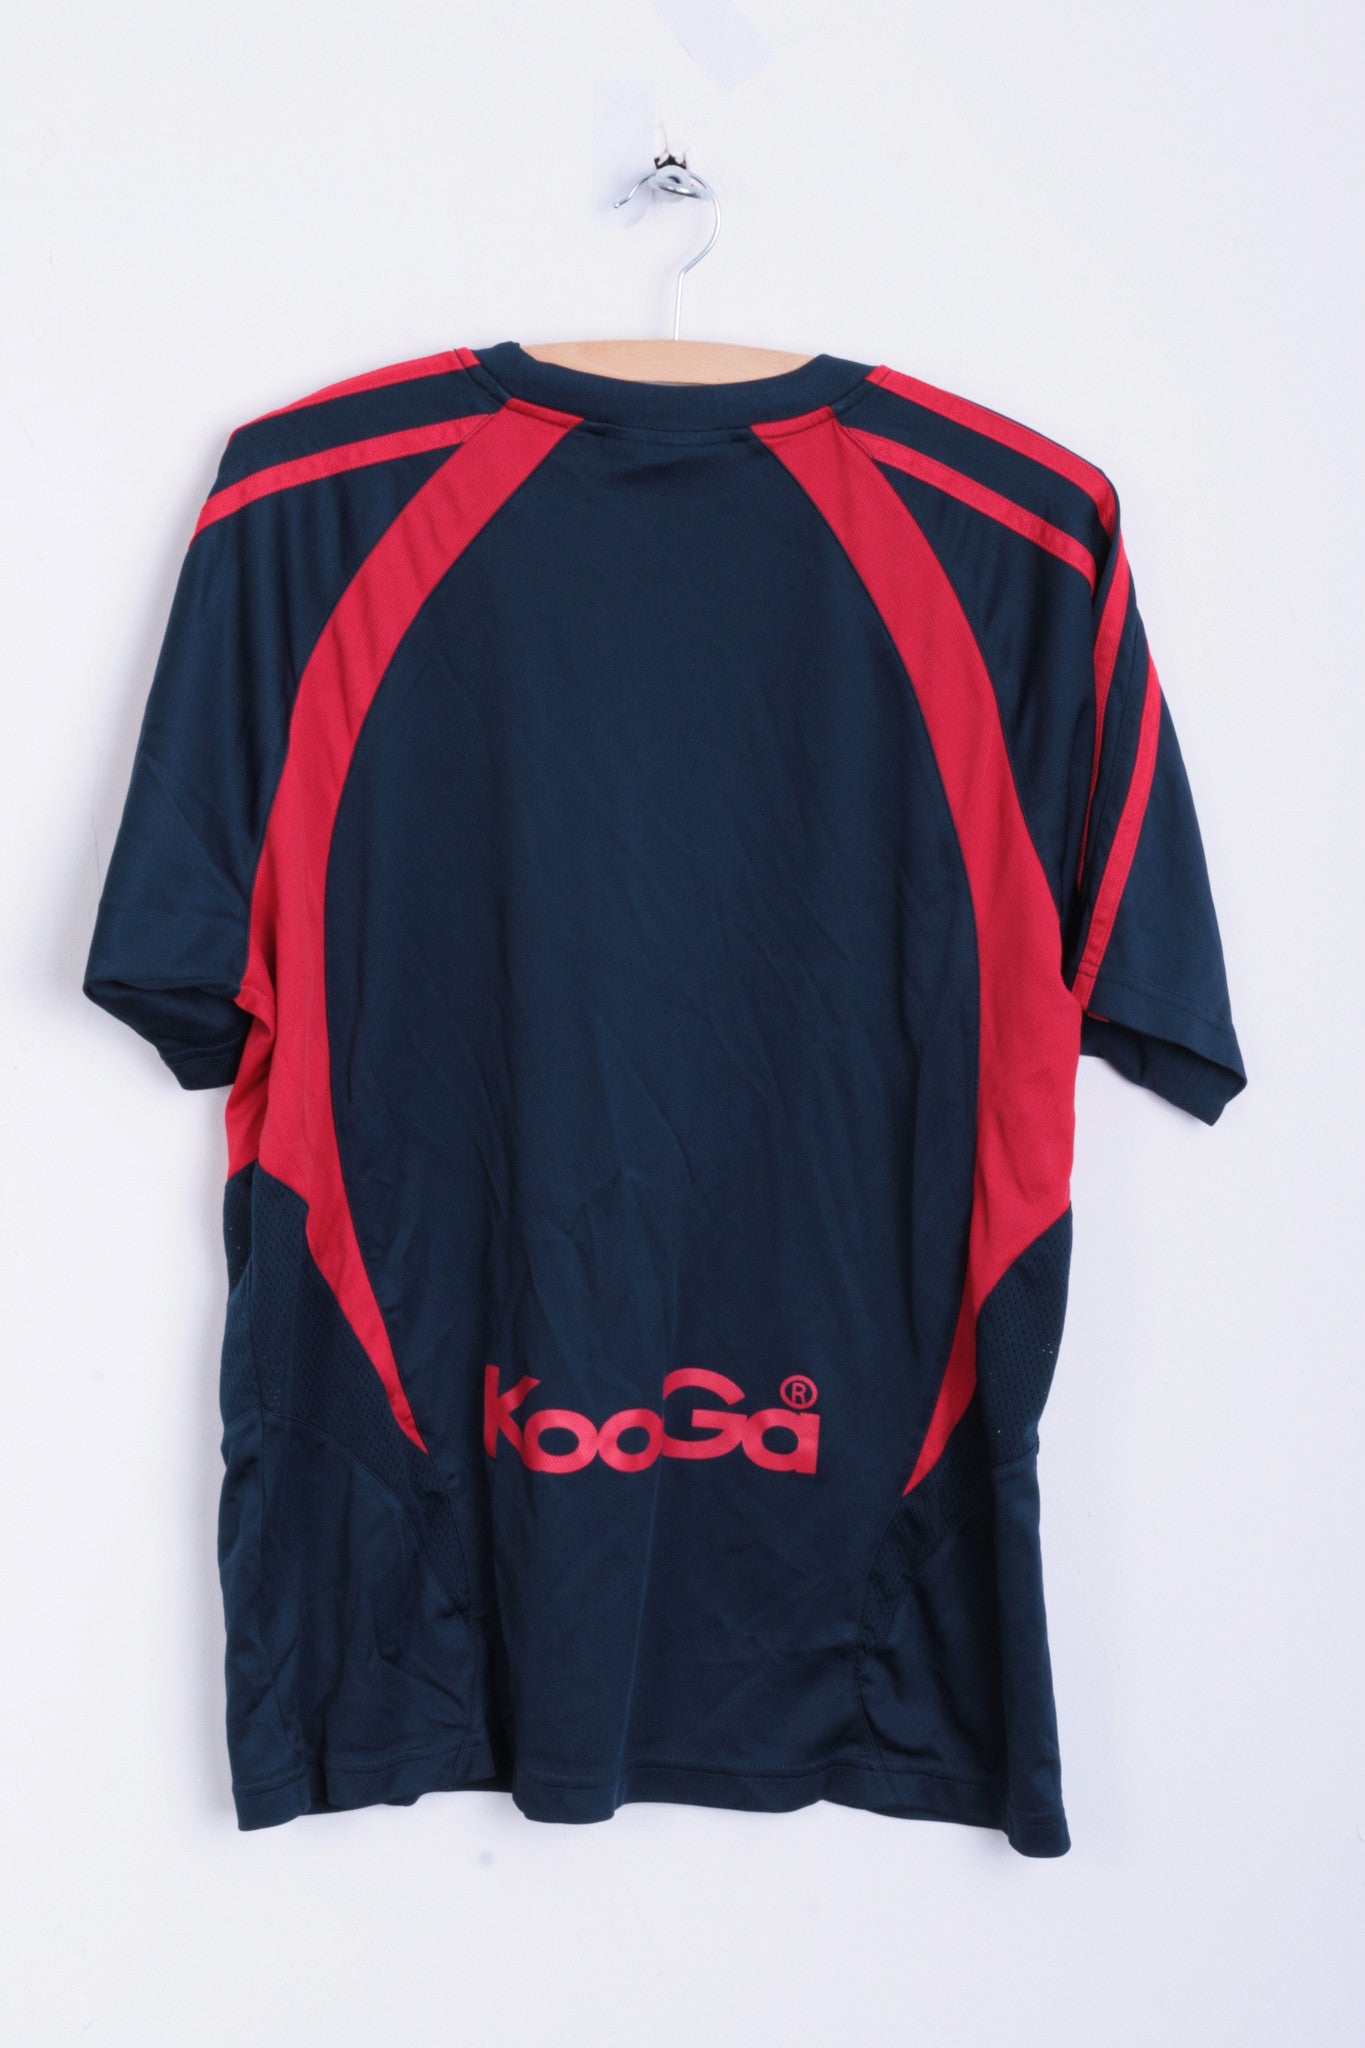 Kooga Manchester Mens L Shirt Short Sleeve Rugby Club Sport Blue - RetrospectClothes